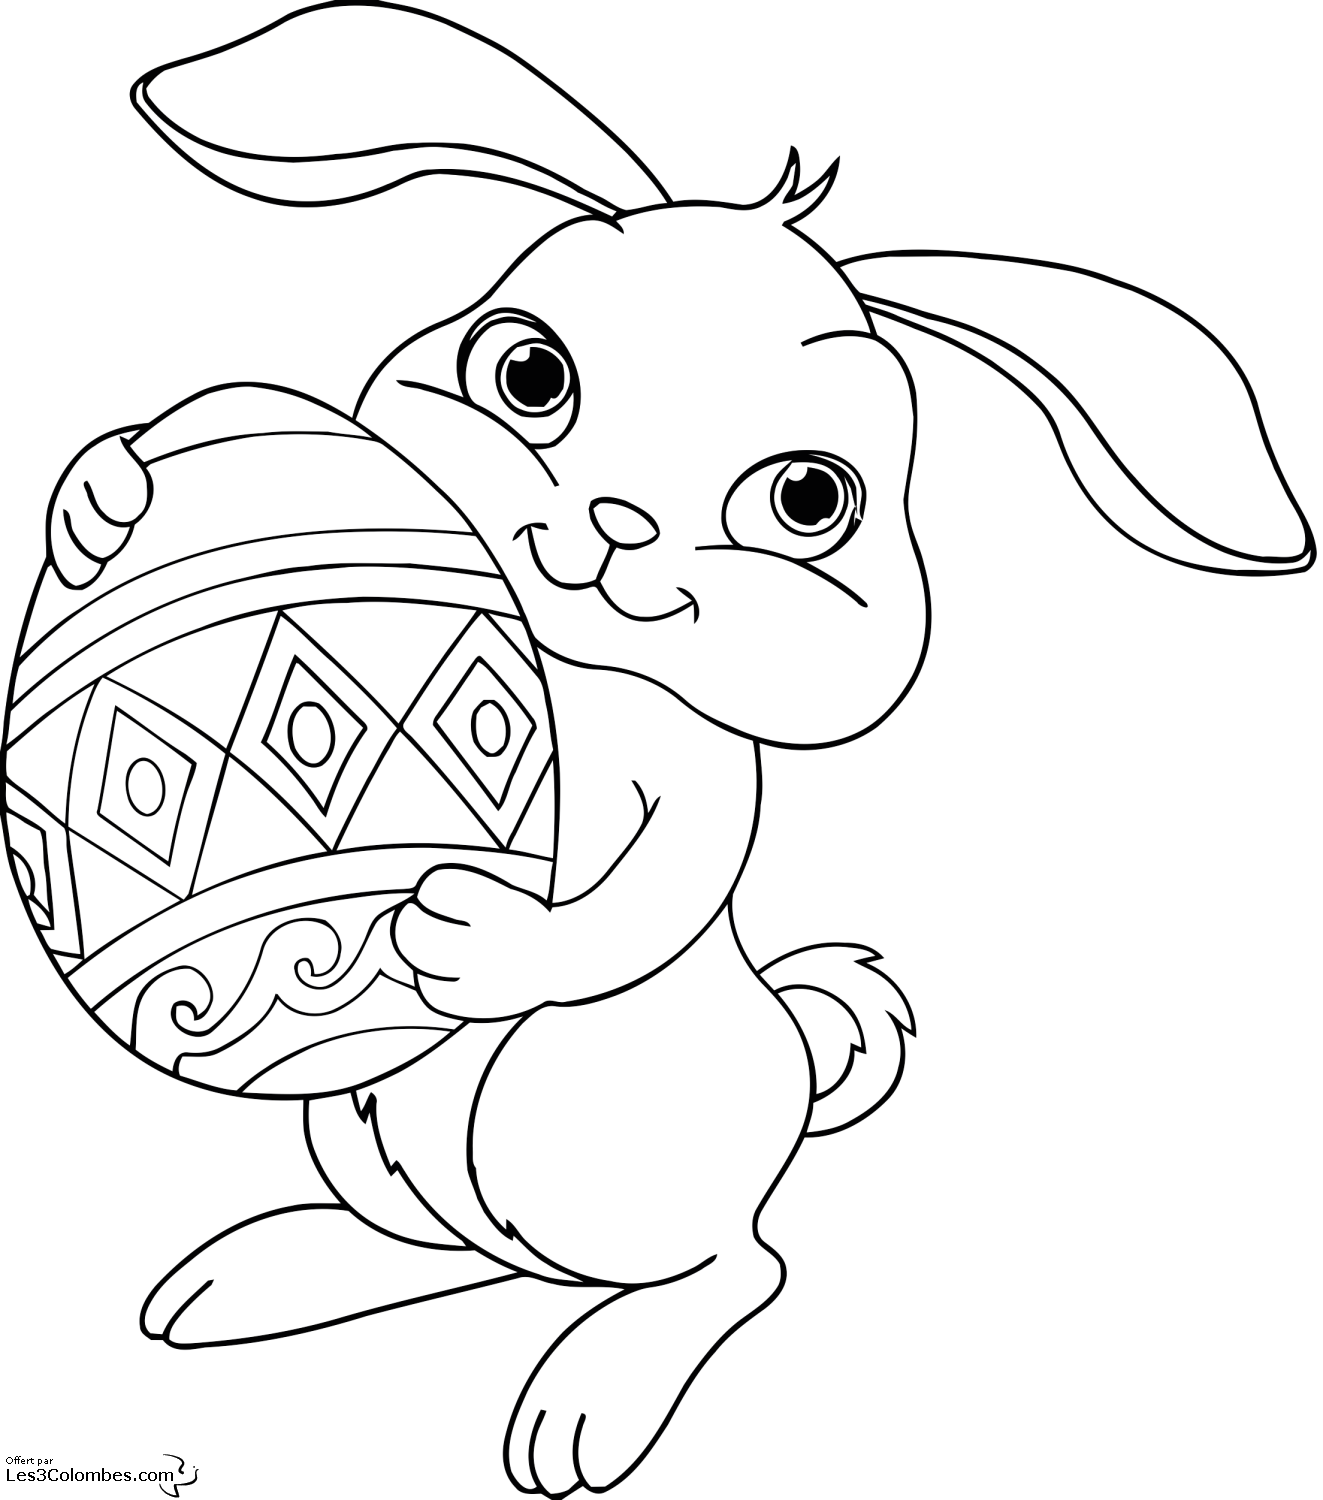 Bonito dibujo de conejo de Pascua para imprimir